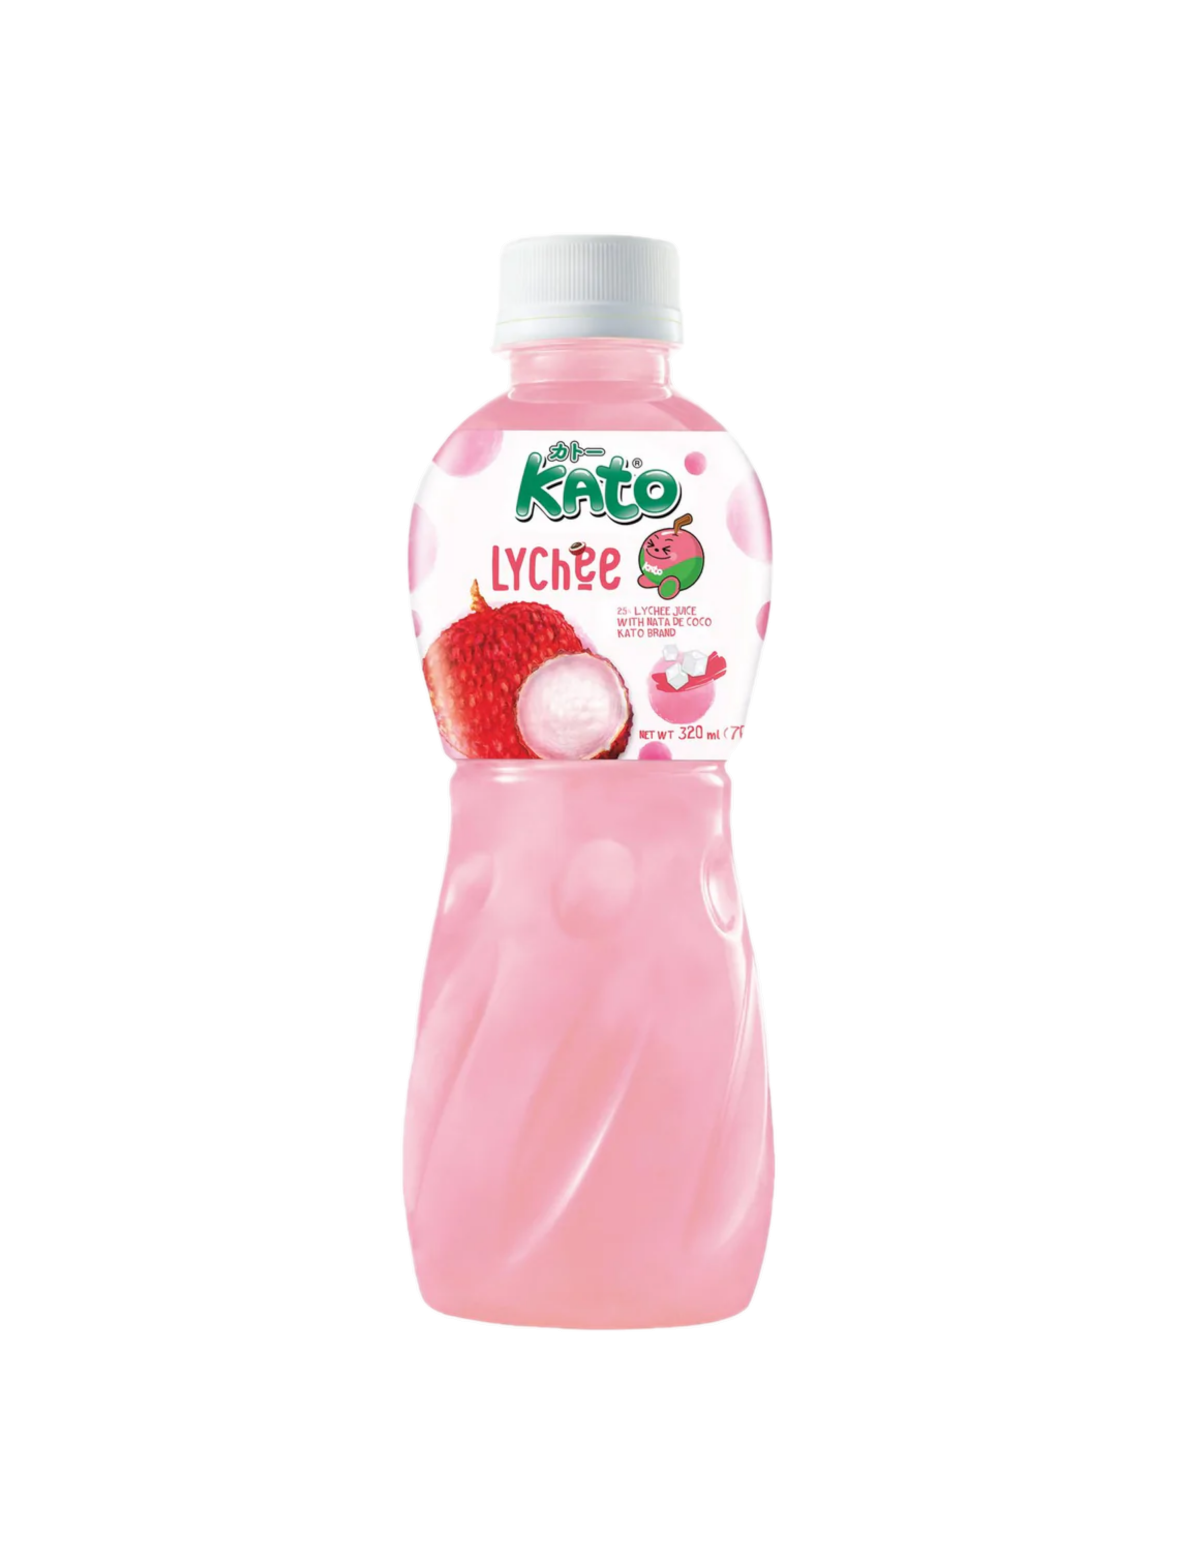 Kato  Lychee juice with nata de coco (320ml)